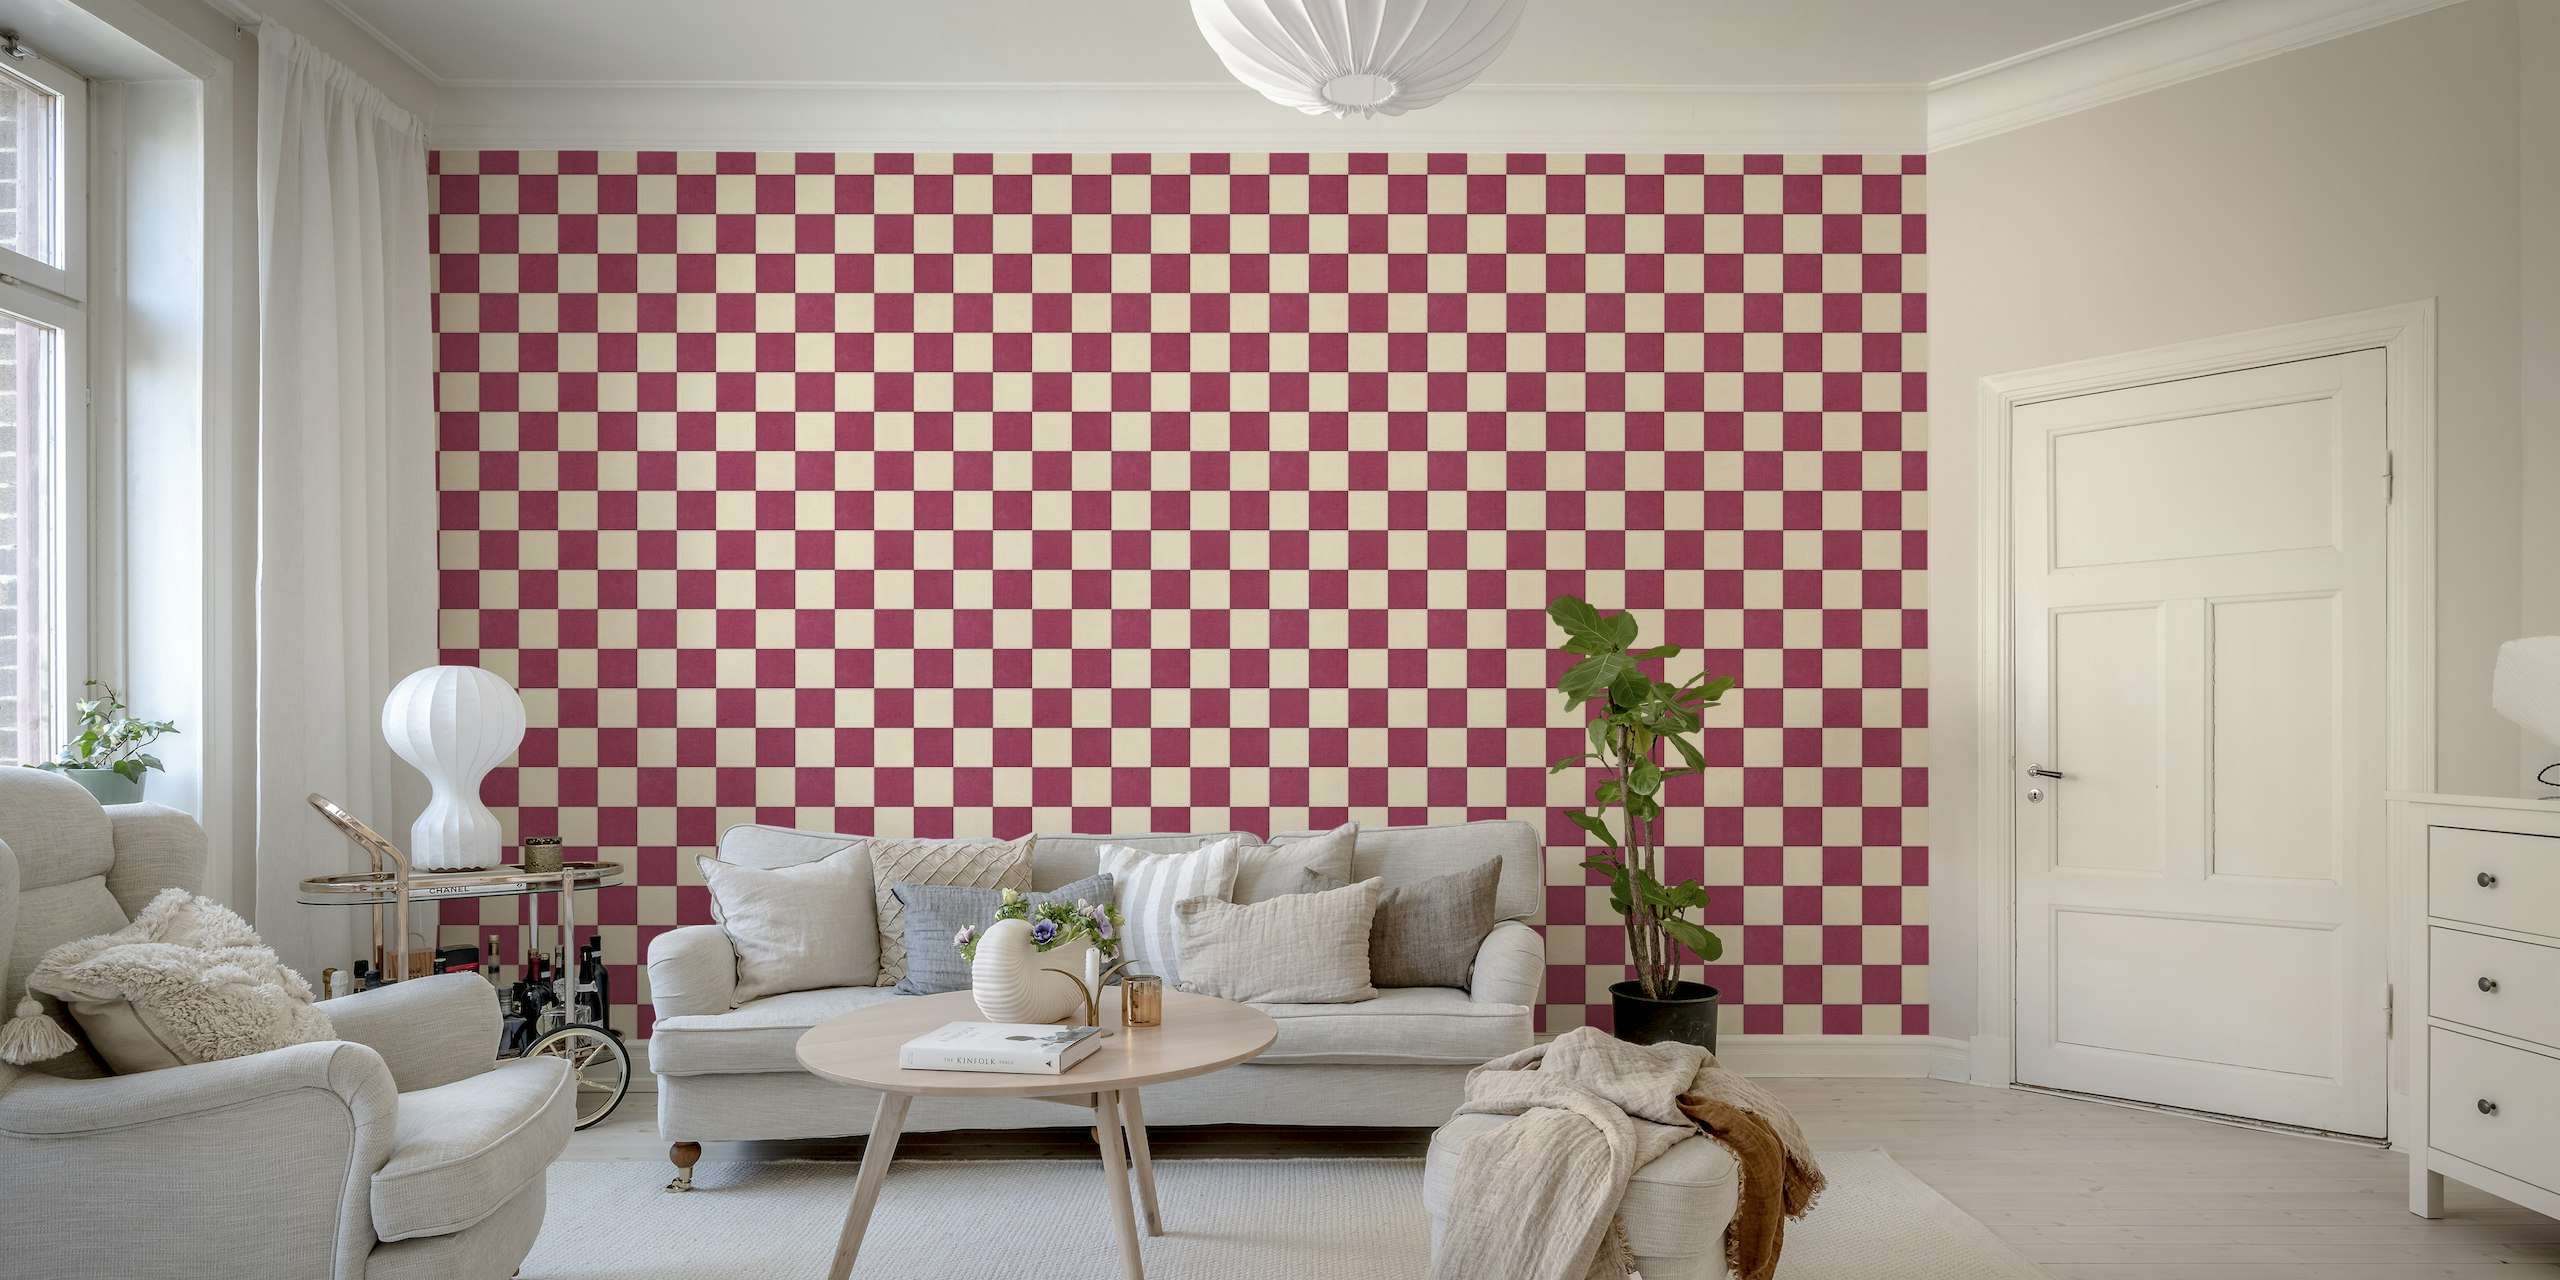 TILES 012 D - Checkerboard wallpaper